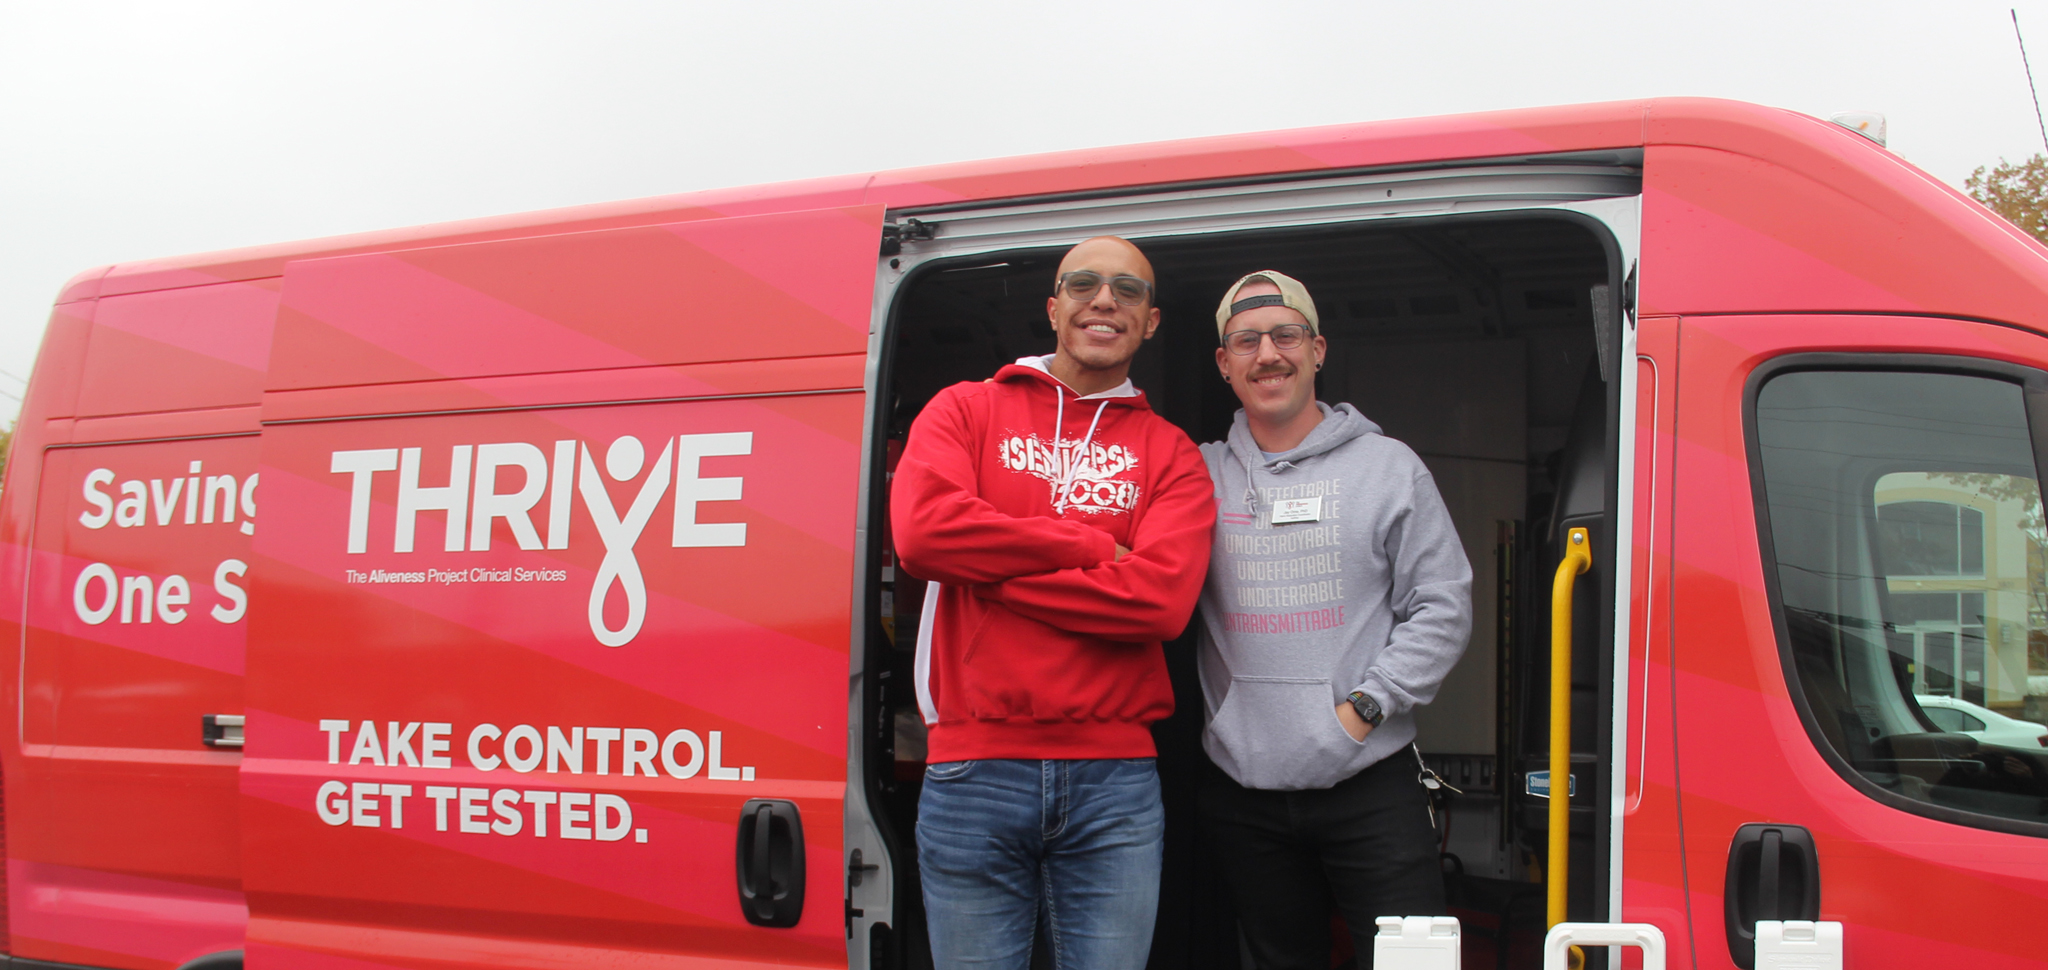 Aliveness Project staff standing in front of mobile van